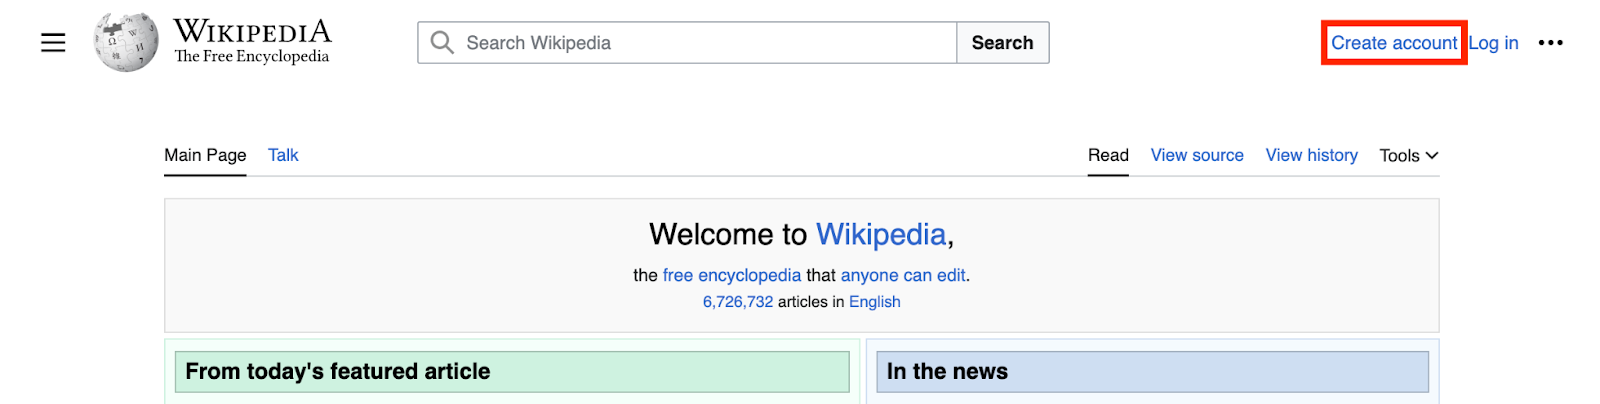 Red-white-blue bag - Wikipedia